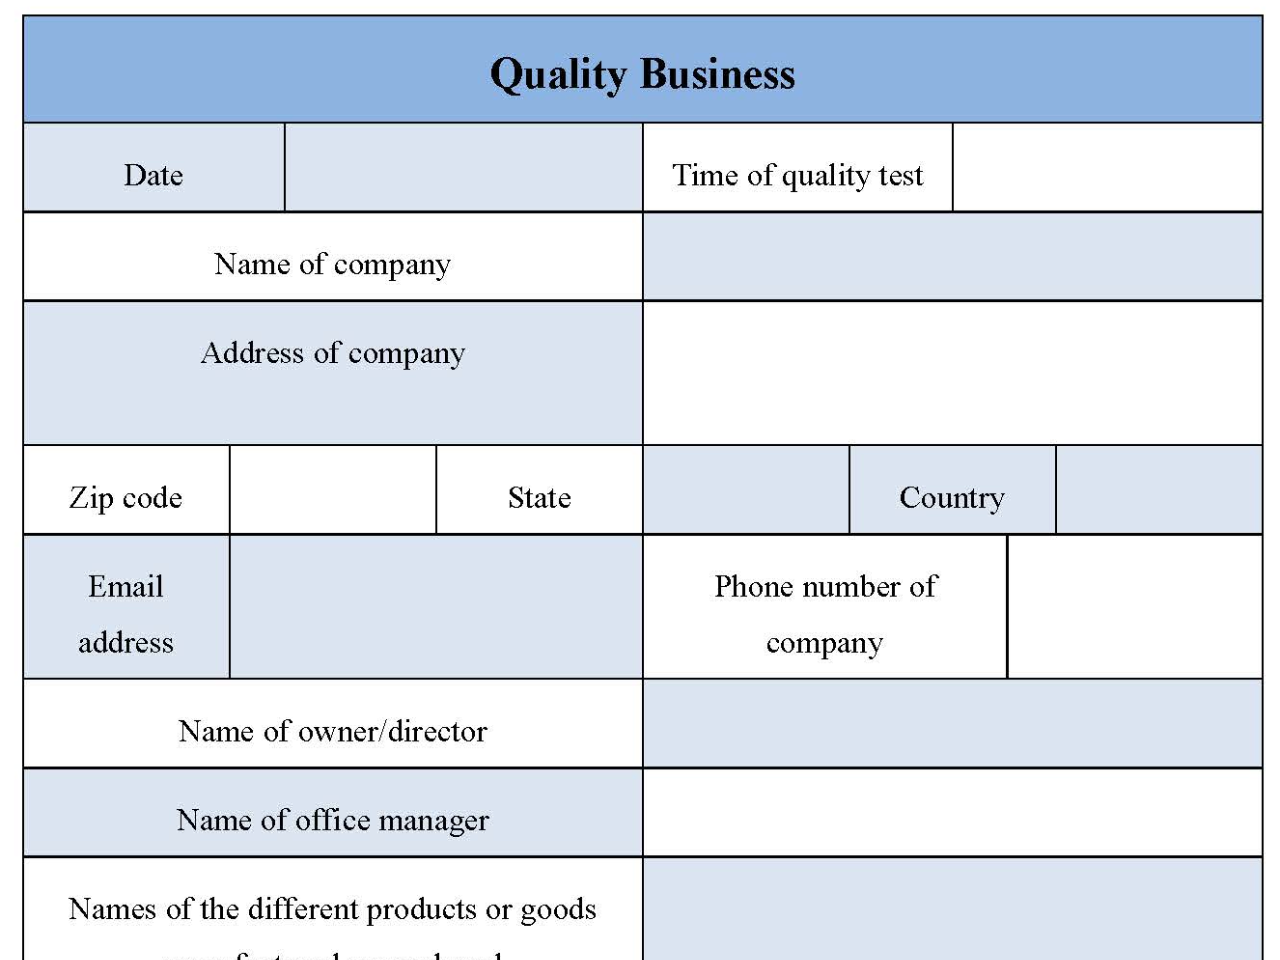 Quality Business Form